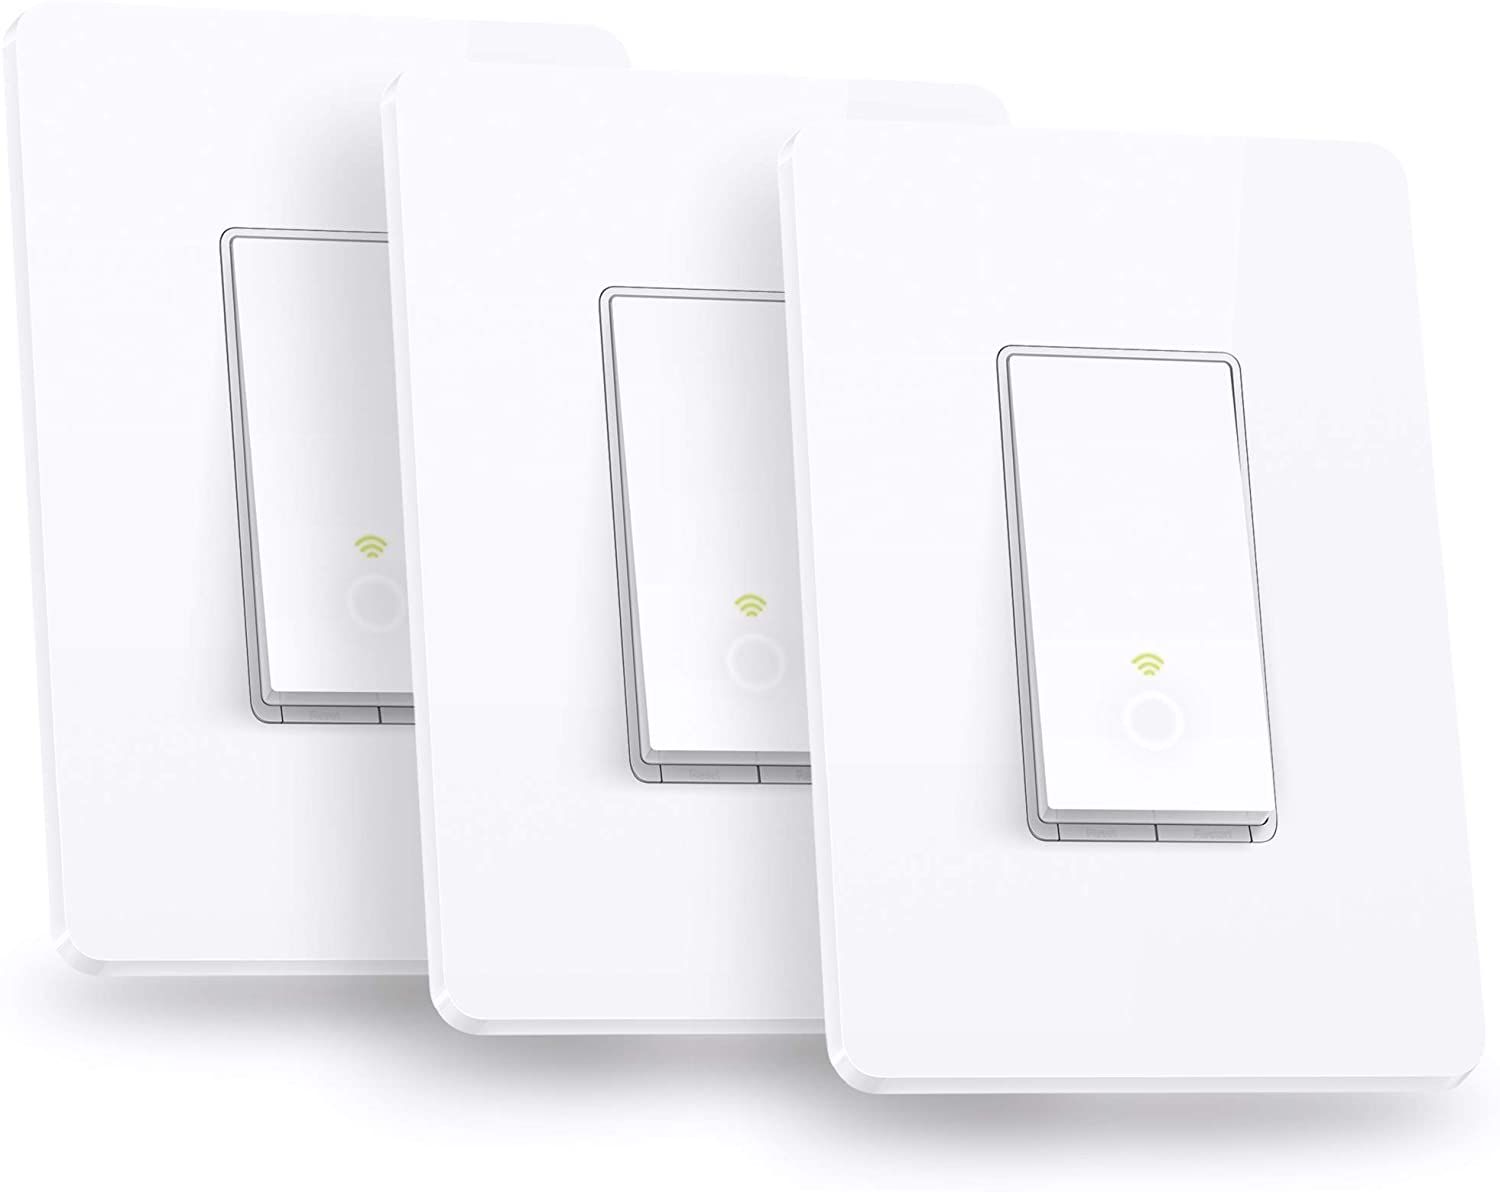 Kasa Smart Light Switch pack of three switches